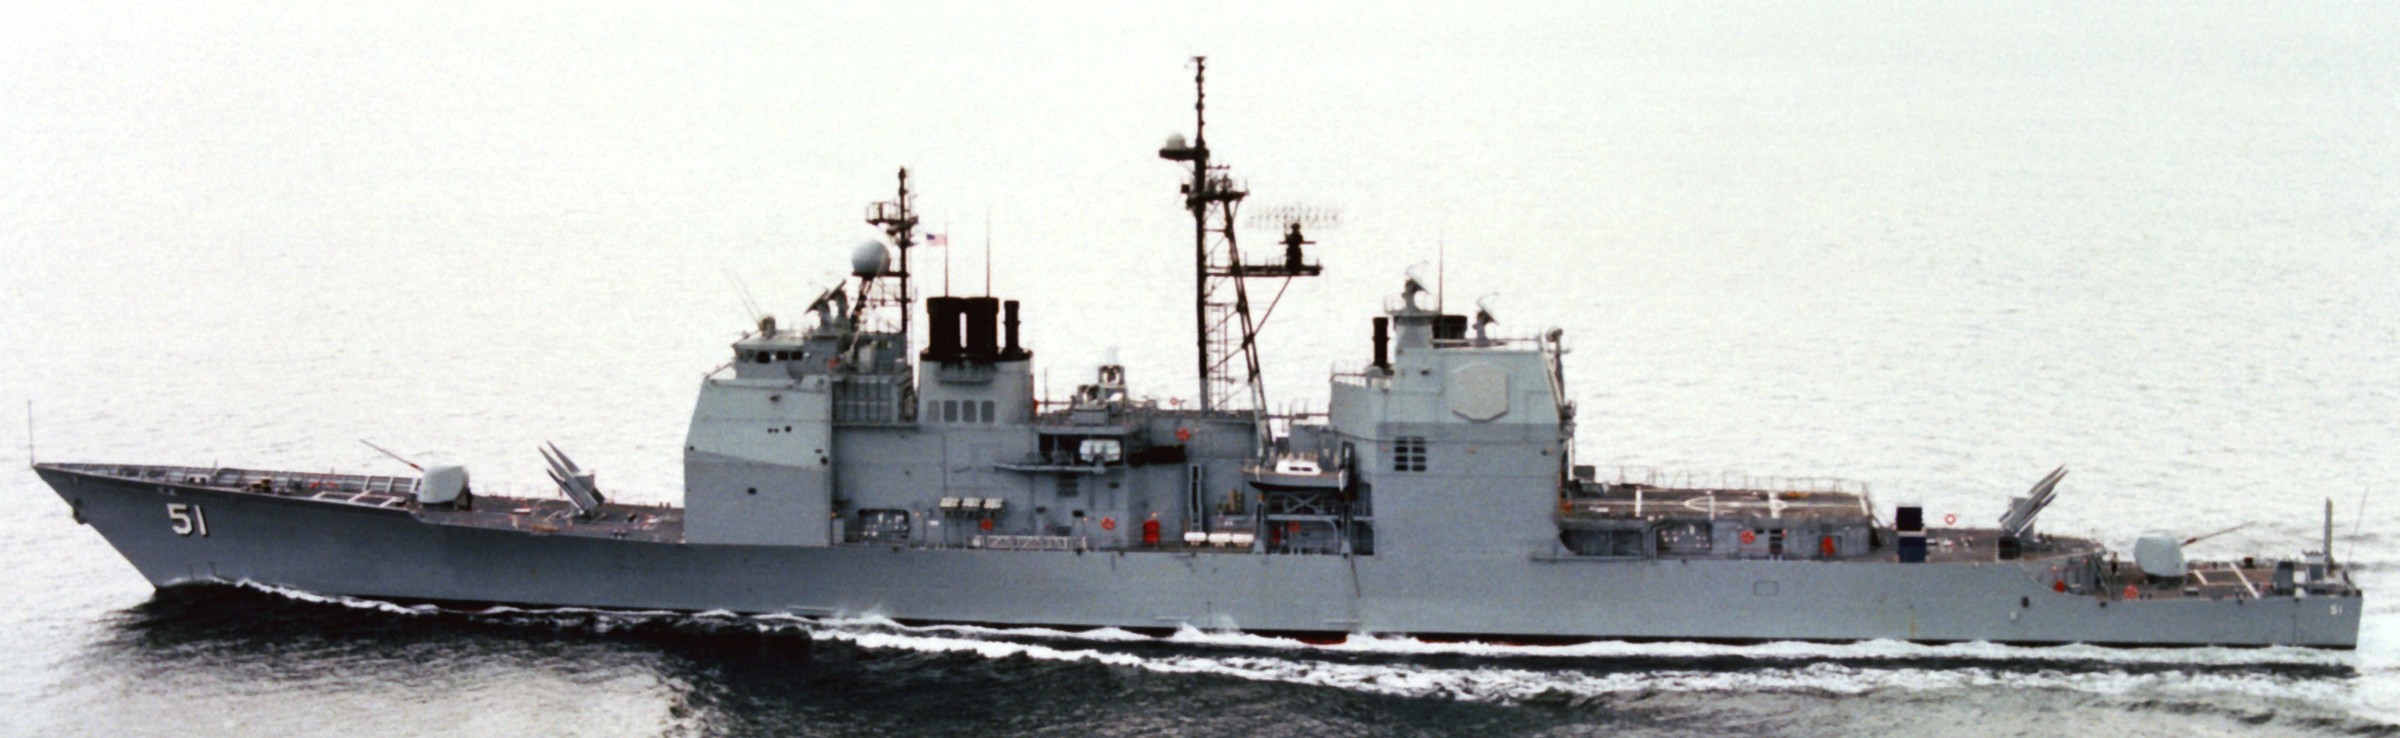 cg-51 uss thomas s. gates ticonderoga class guided missile cruiser aegis us navy builder's sea trials 29